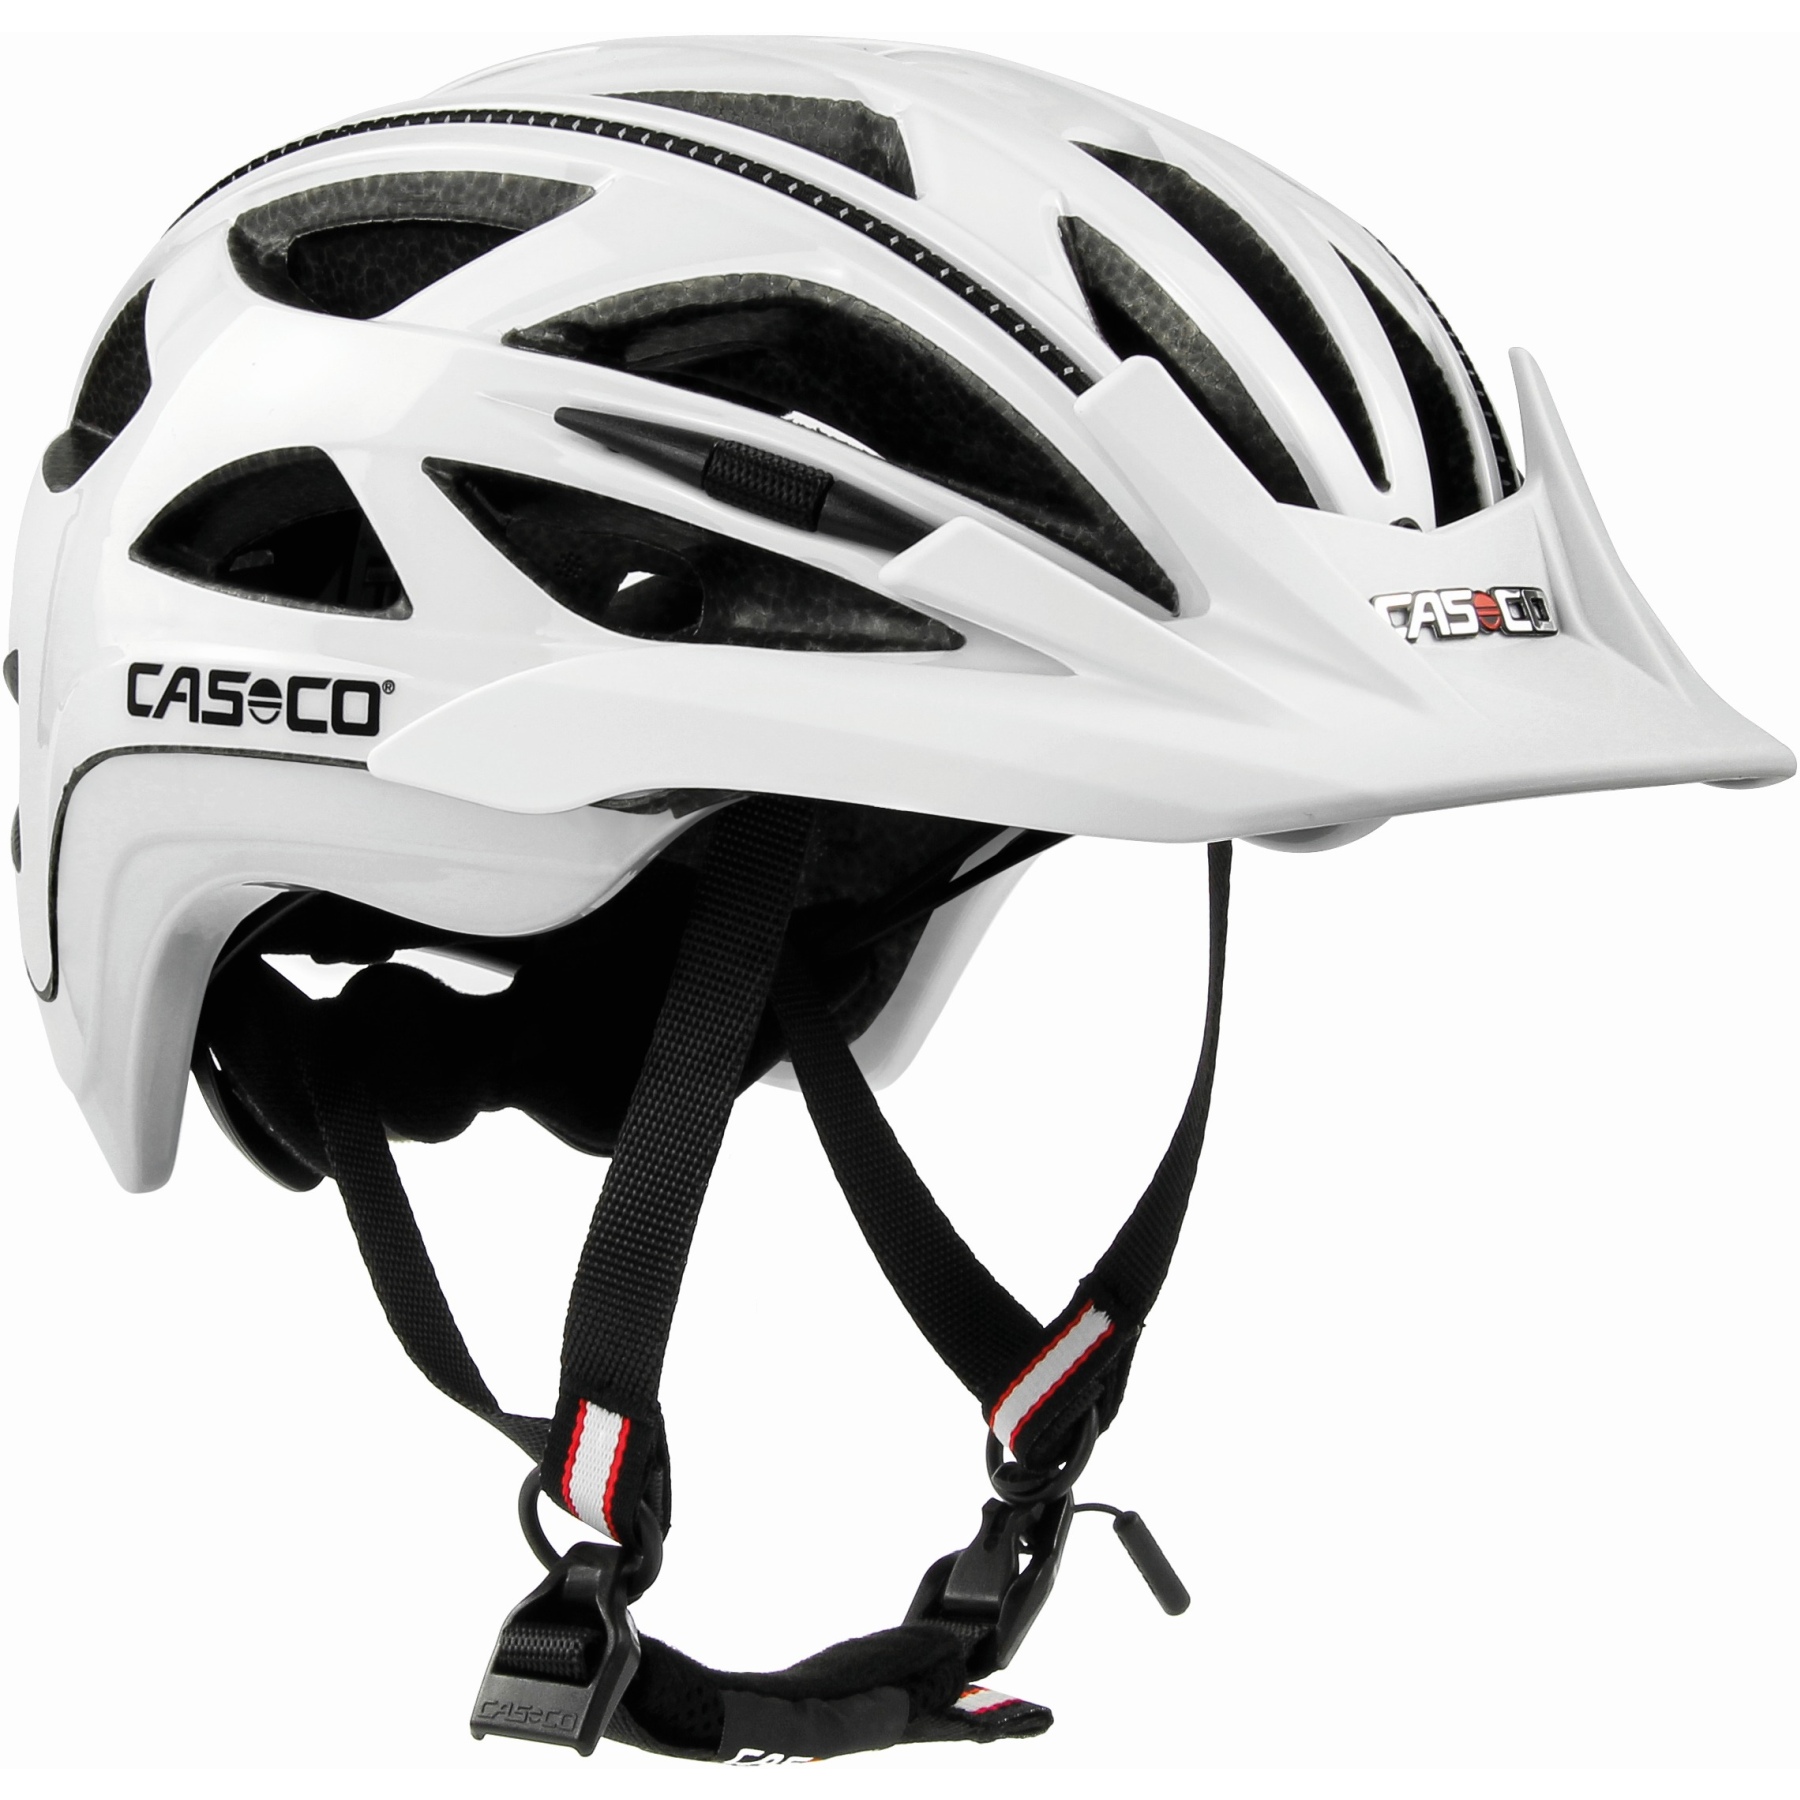 Image of Casco Activ 2 Helmet - white shiny